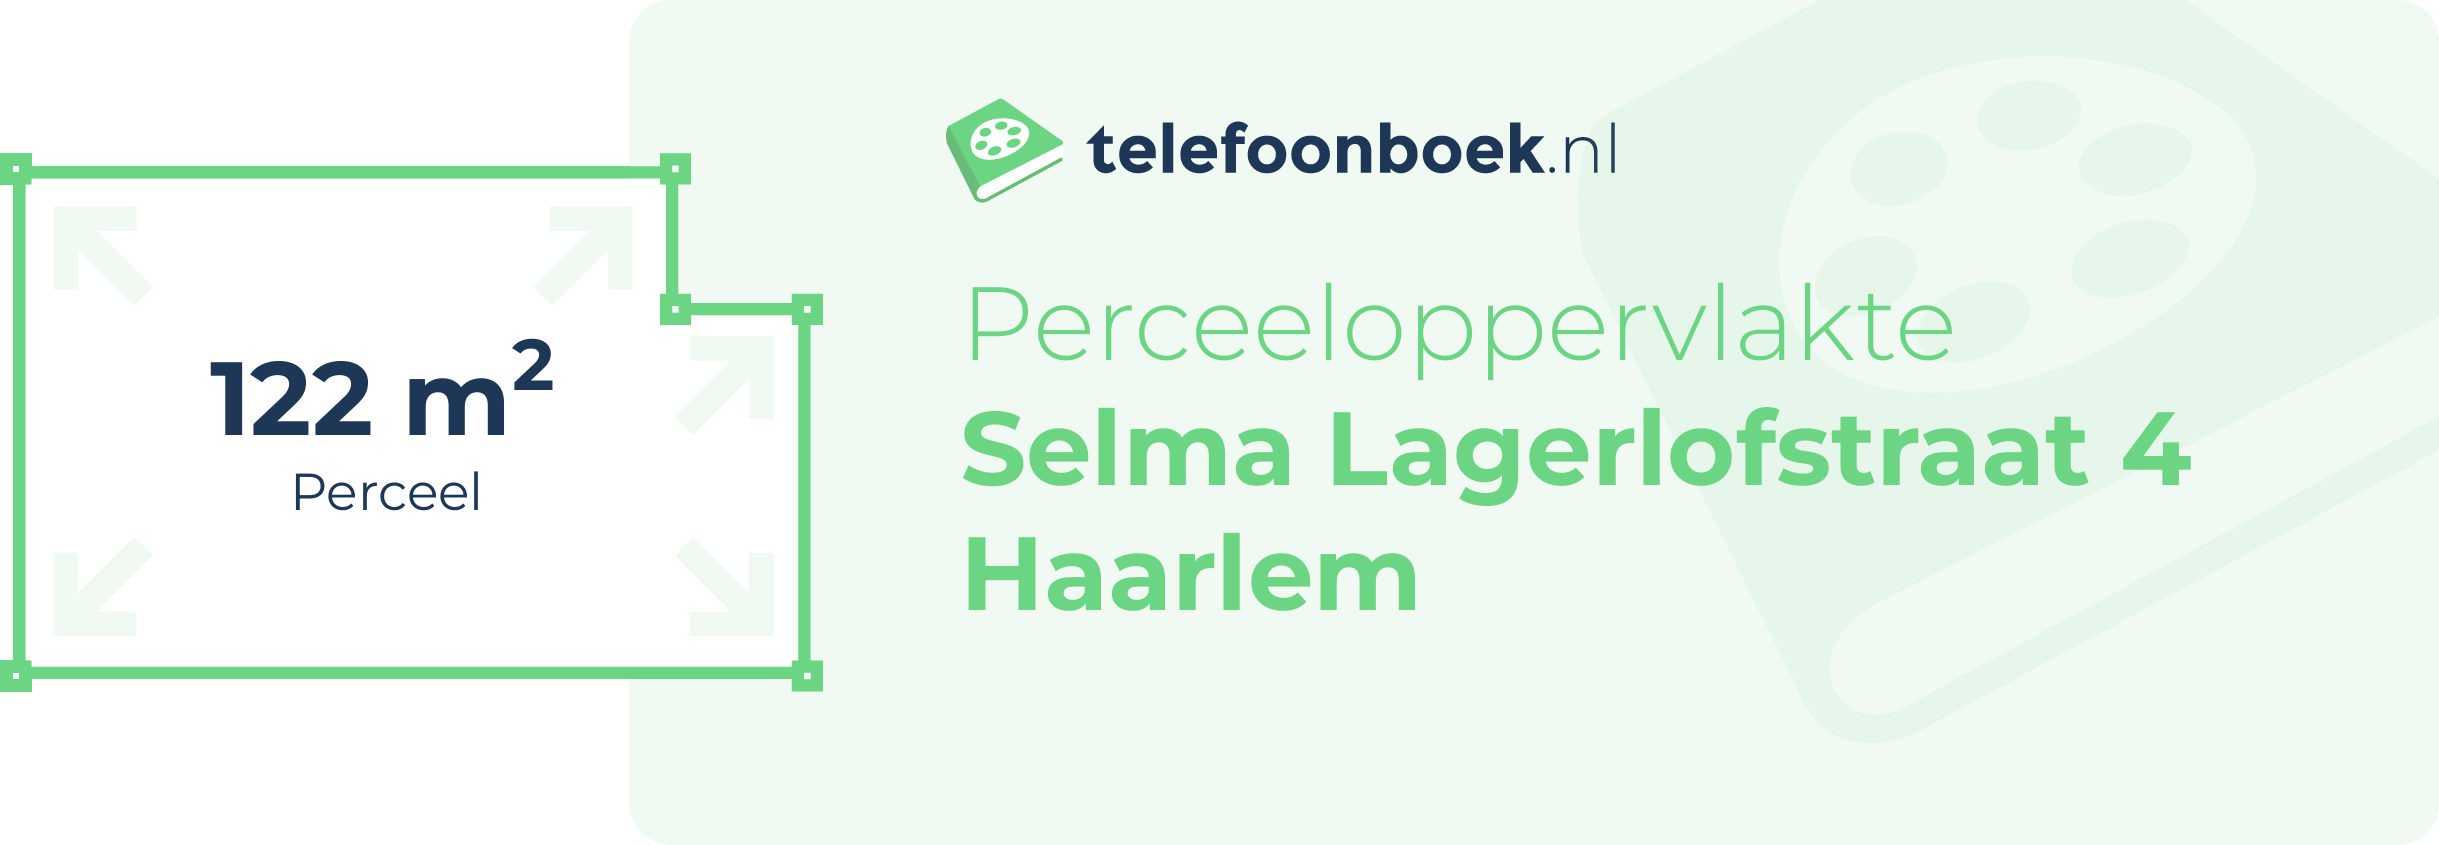 Perceeloppervlakte Selma Lagerlofstraat 4 Haarlem